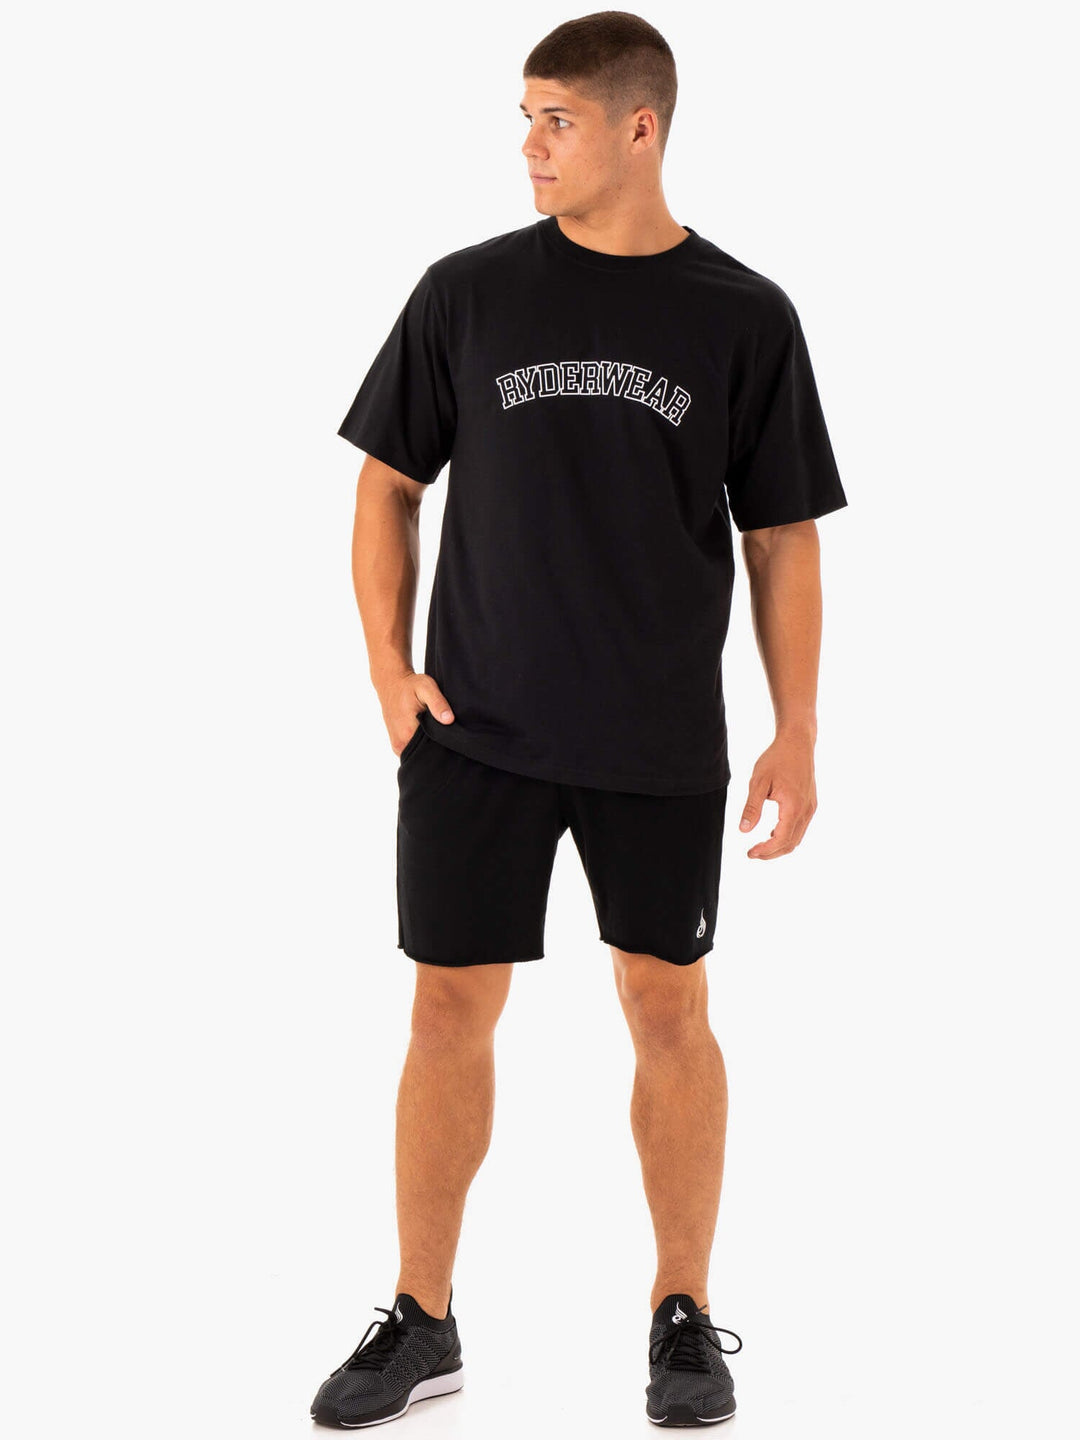 Advance Oversized T-Shirt - Black - Ryderwear